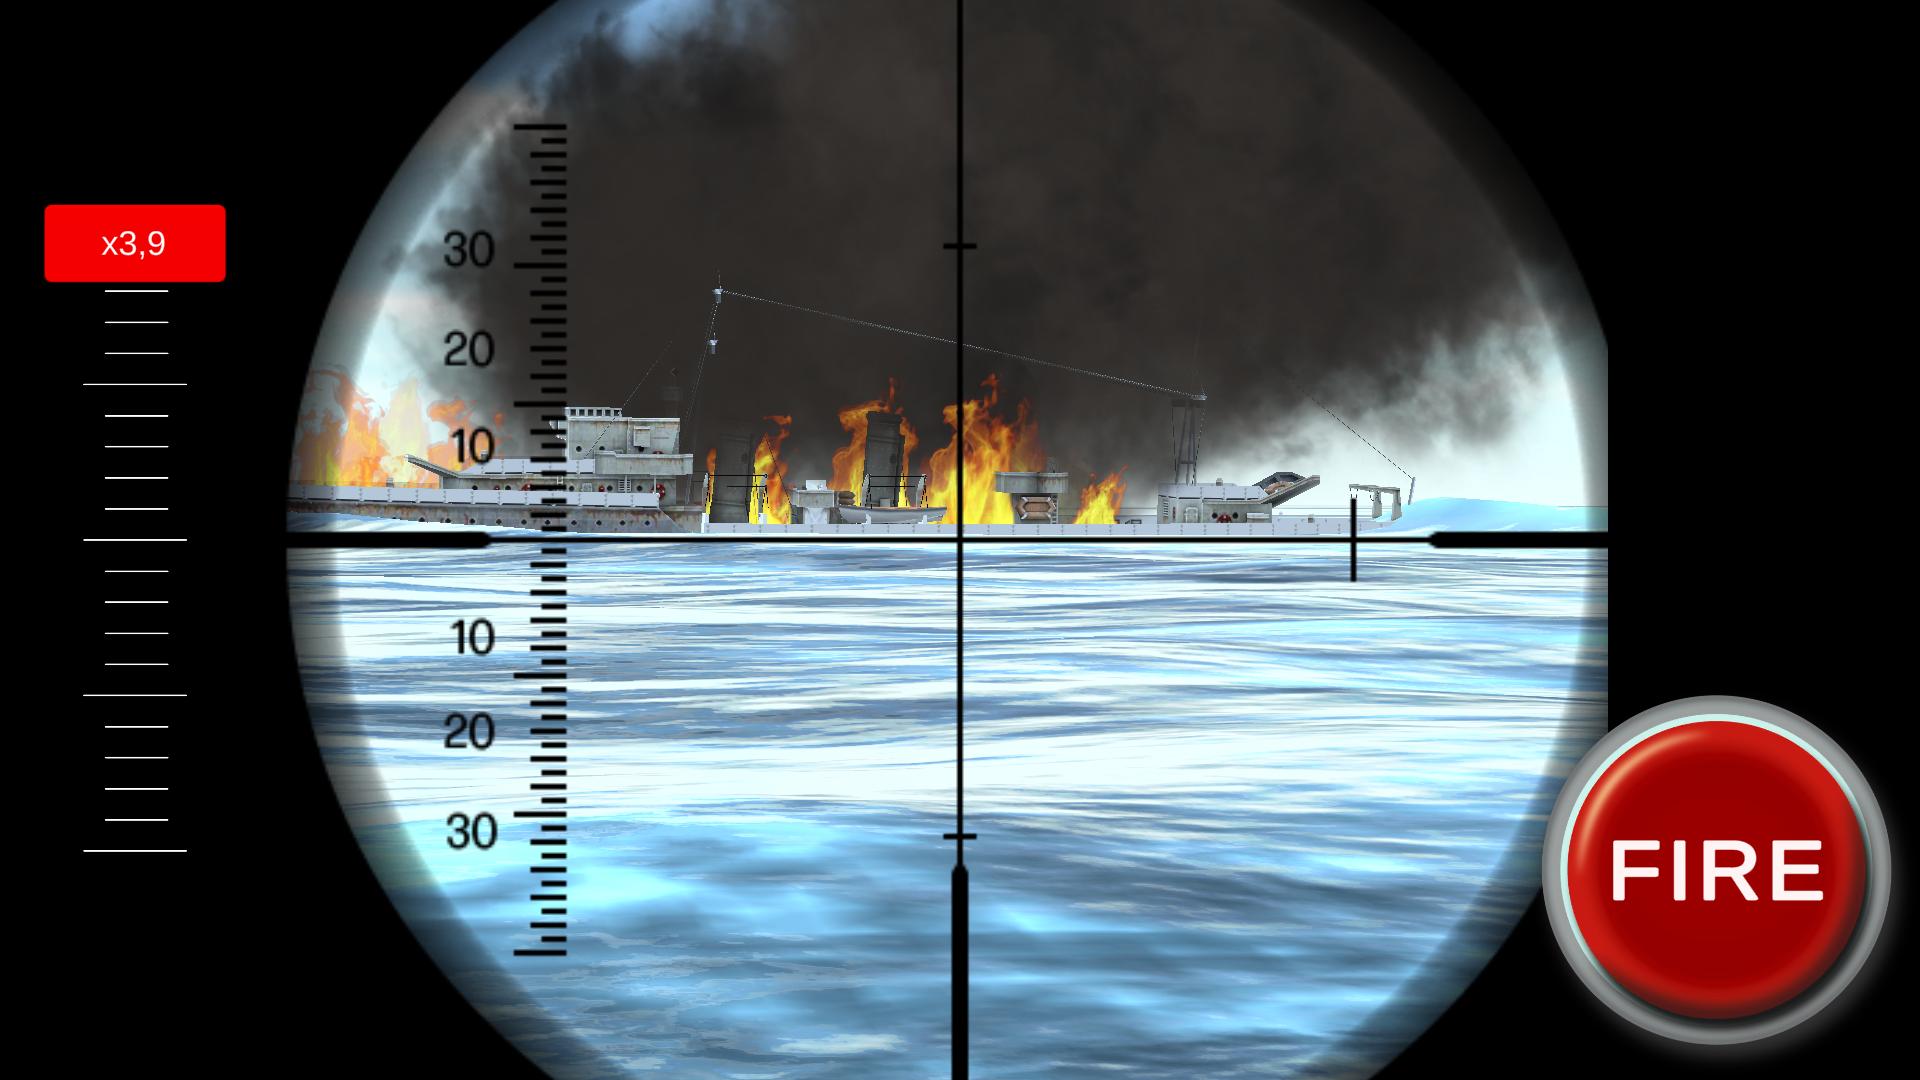 Uboat Attack - Android game screenshots.